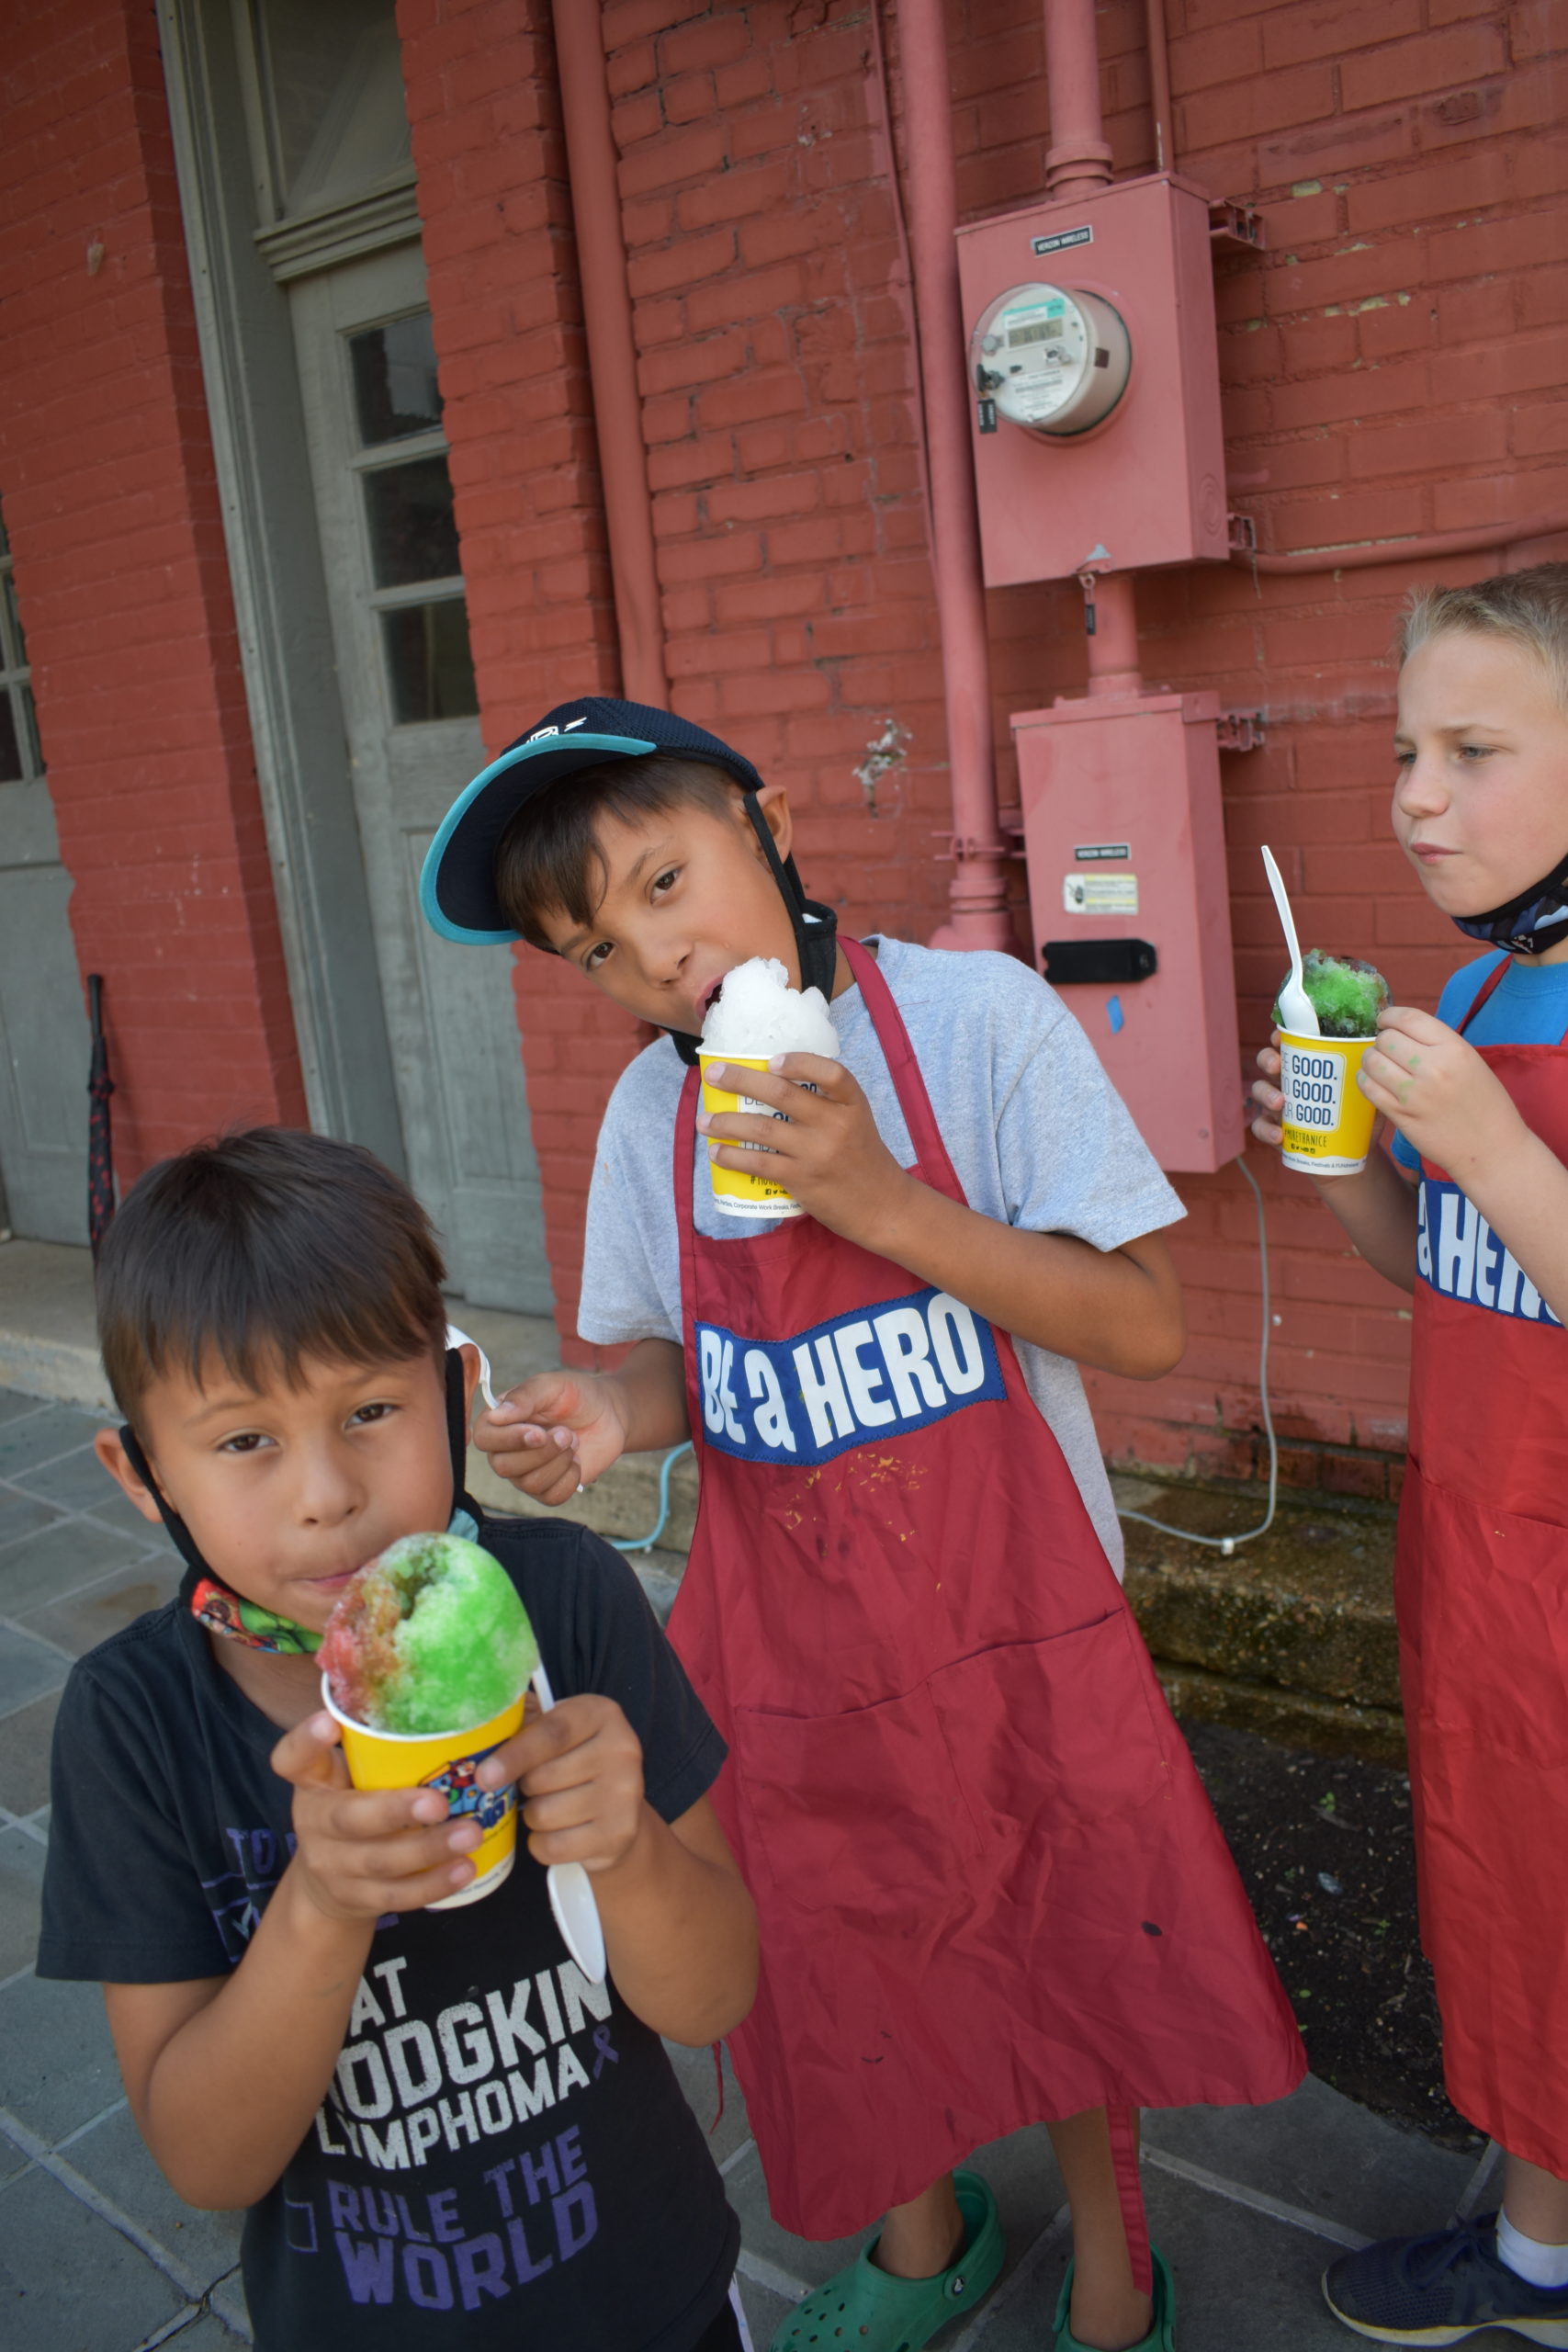 Image three boys eating ice cream